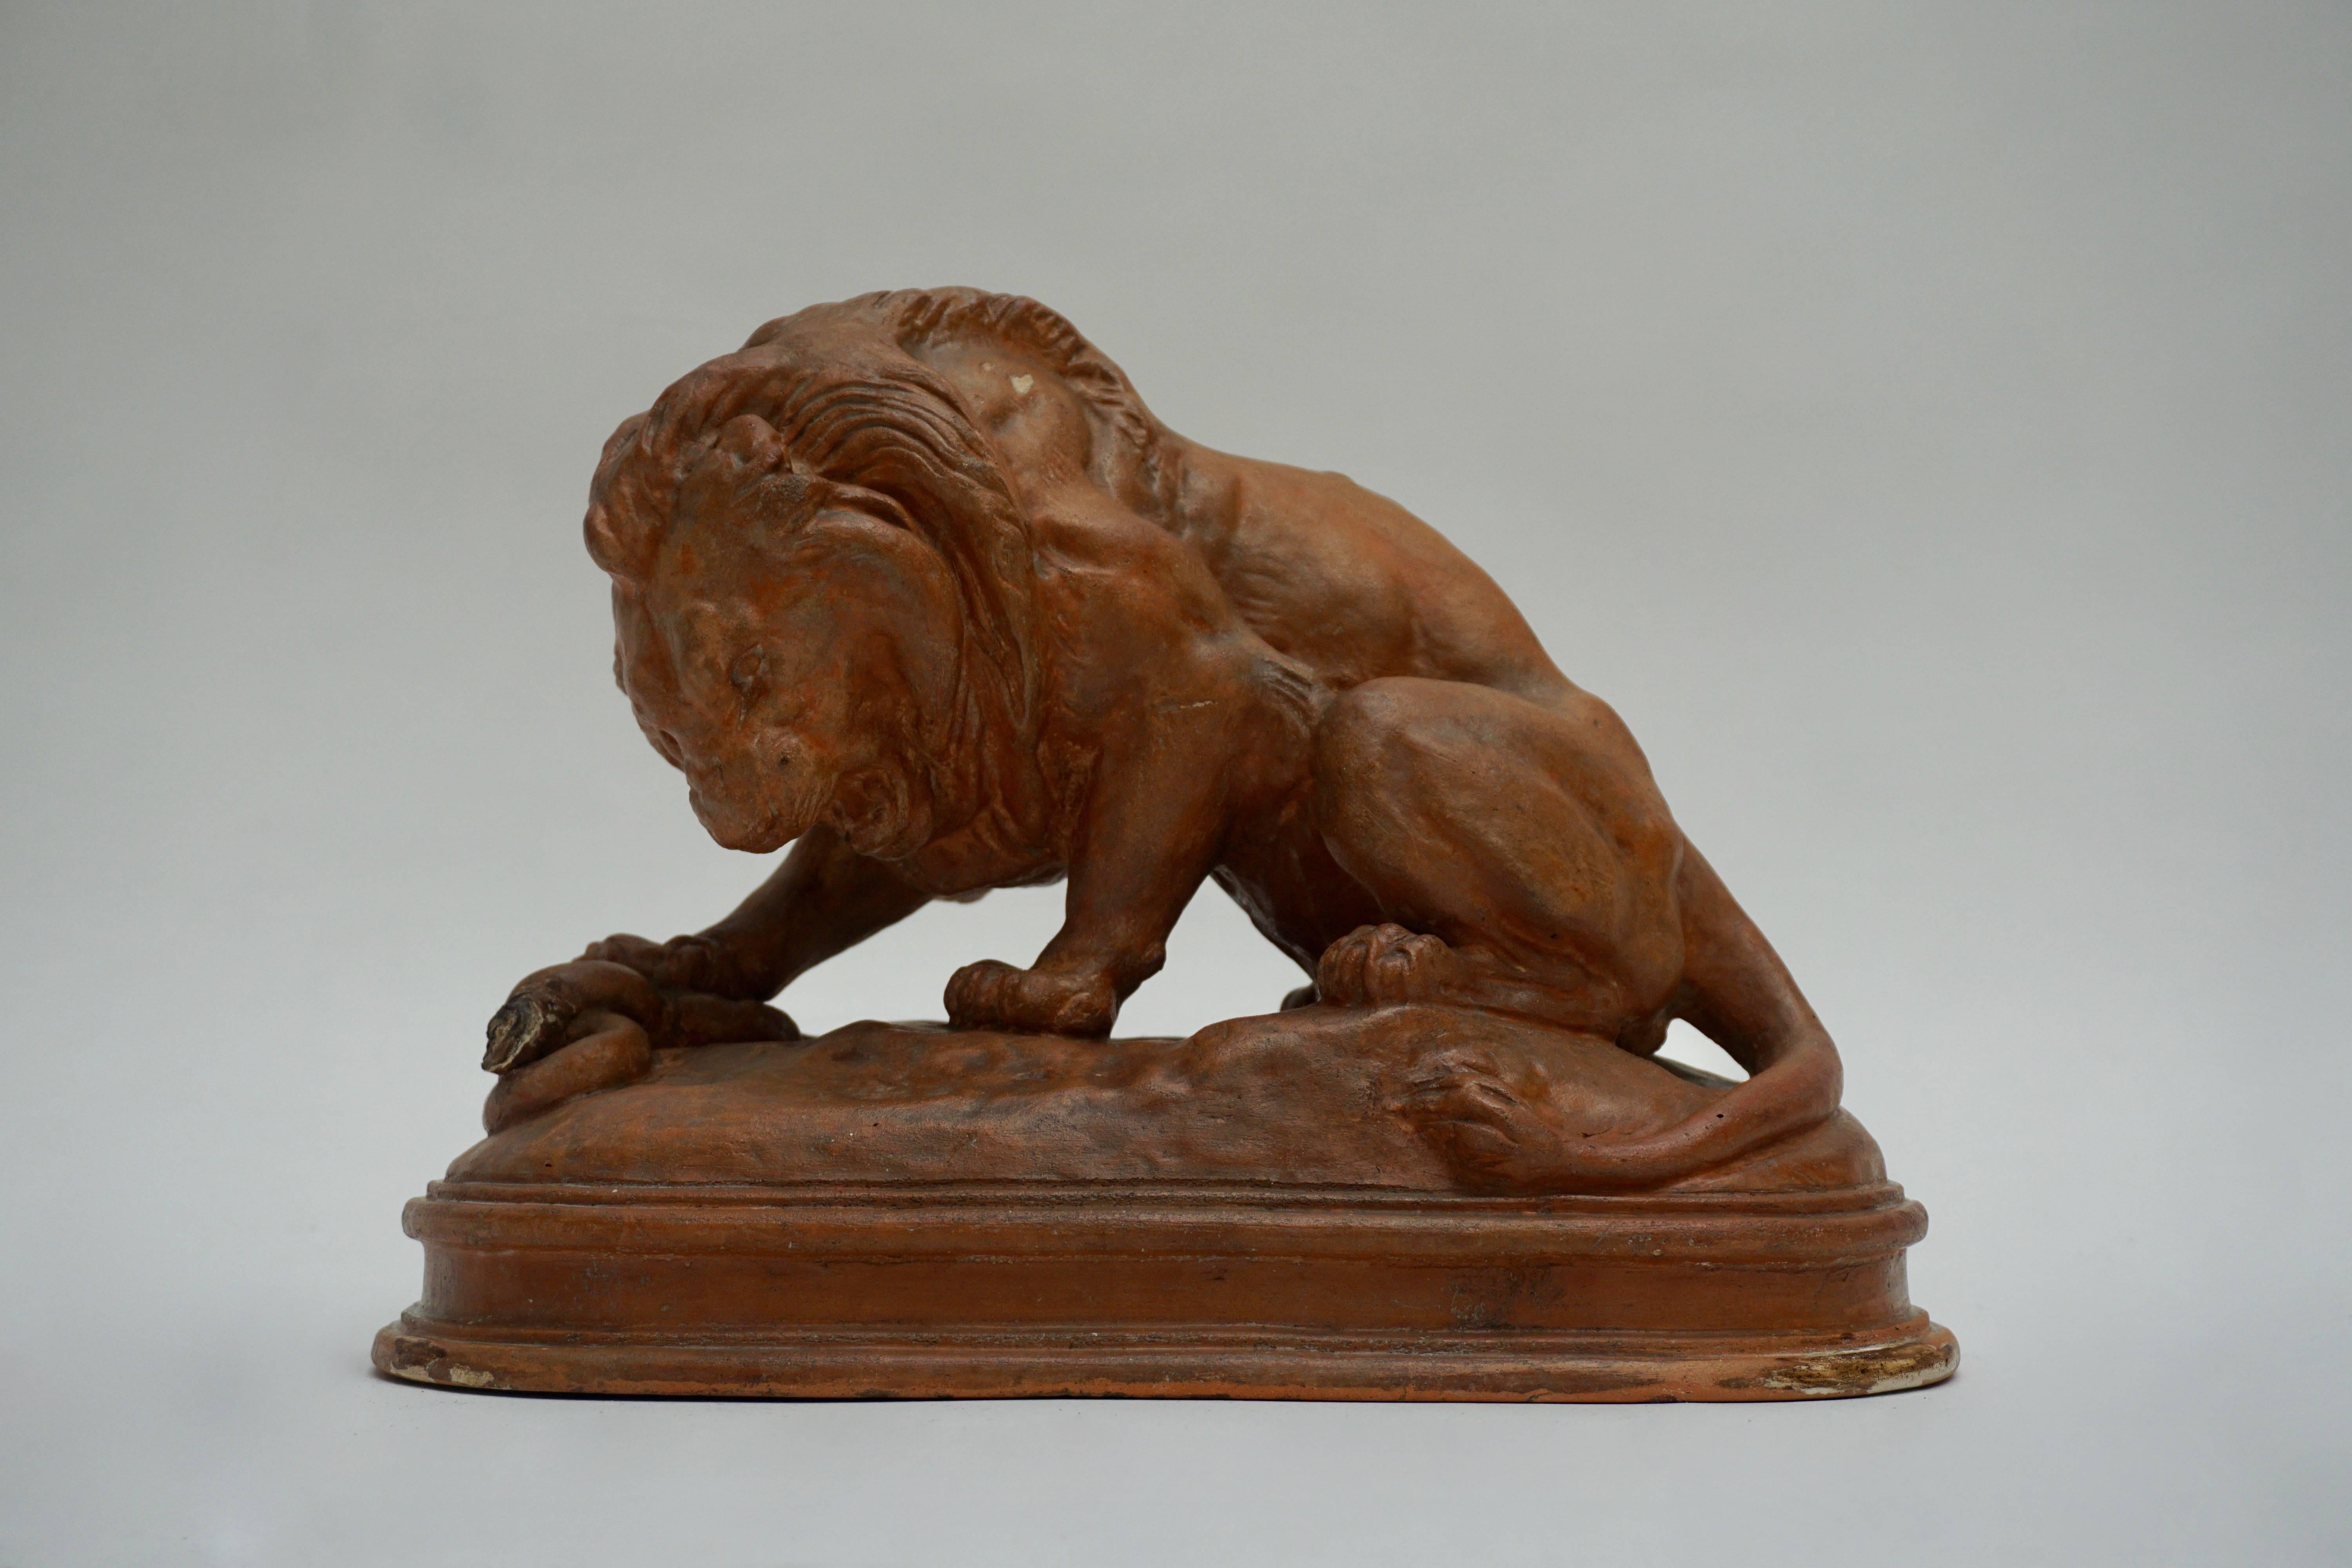 Terracotta lion sculpture.
Measures: Width 34 cm.
Height 25 cm.